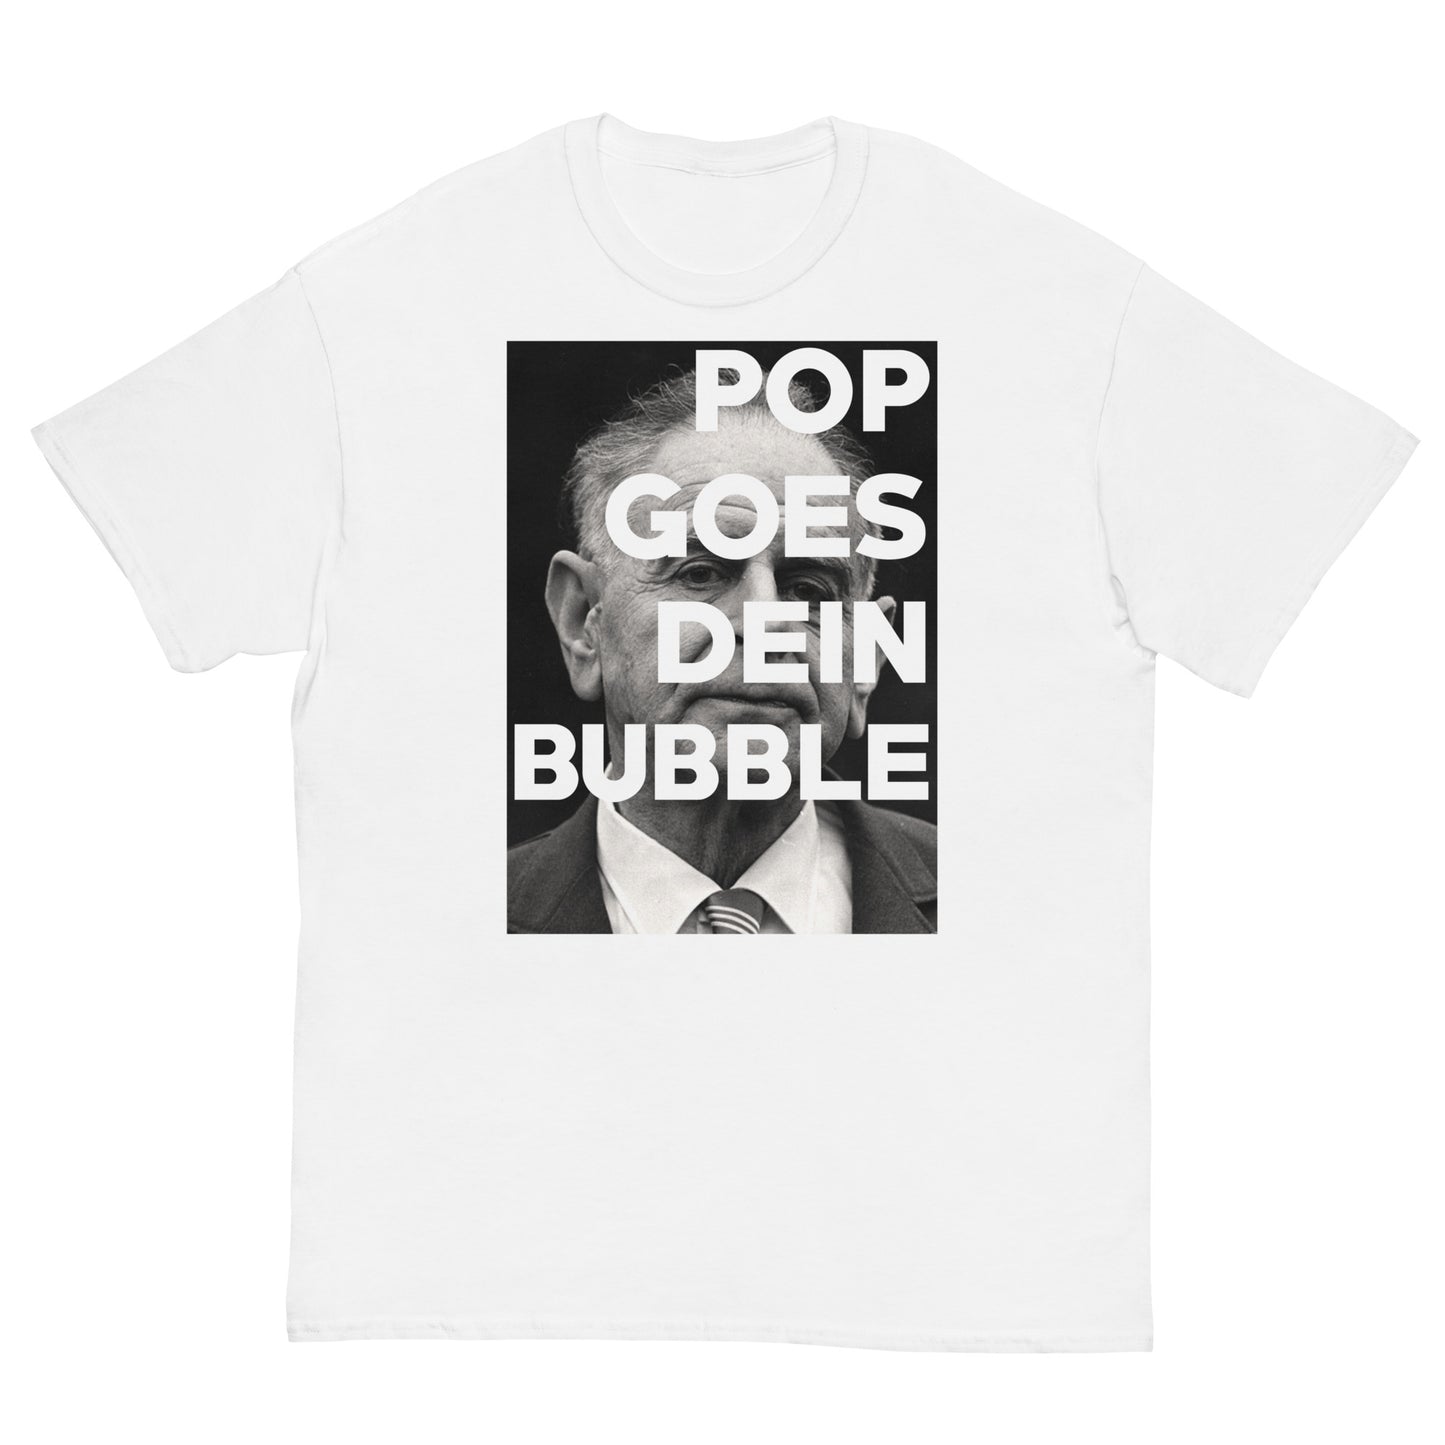 POP GOES DEIN BUBBLE - Men's classic tee